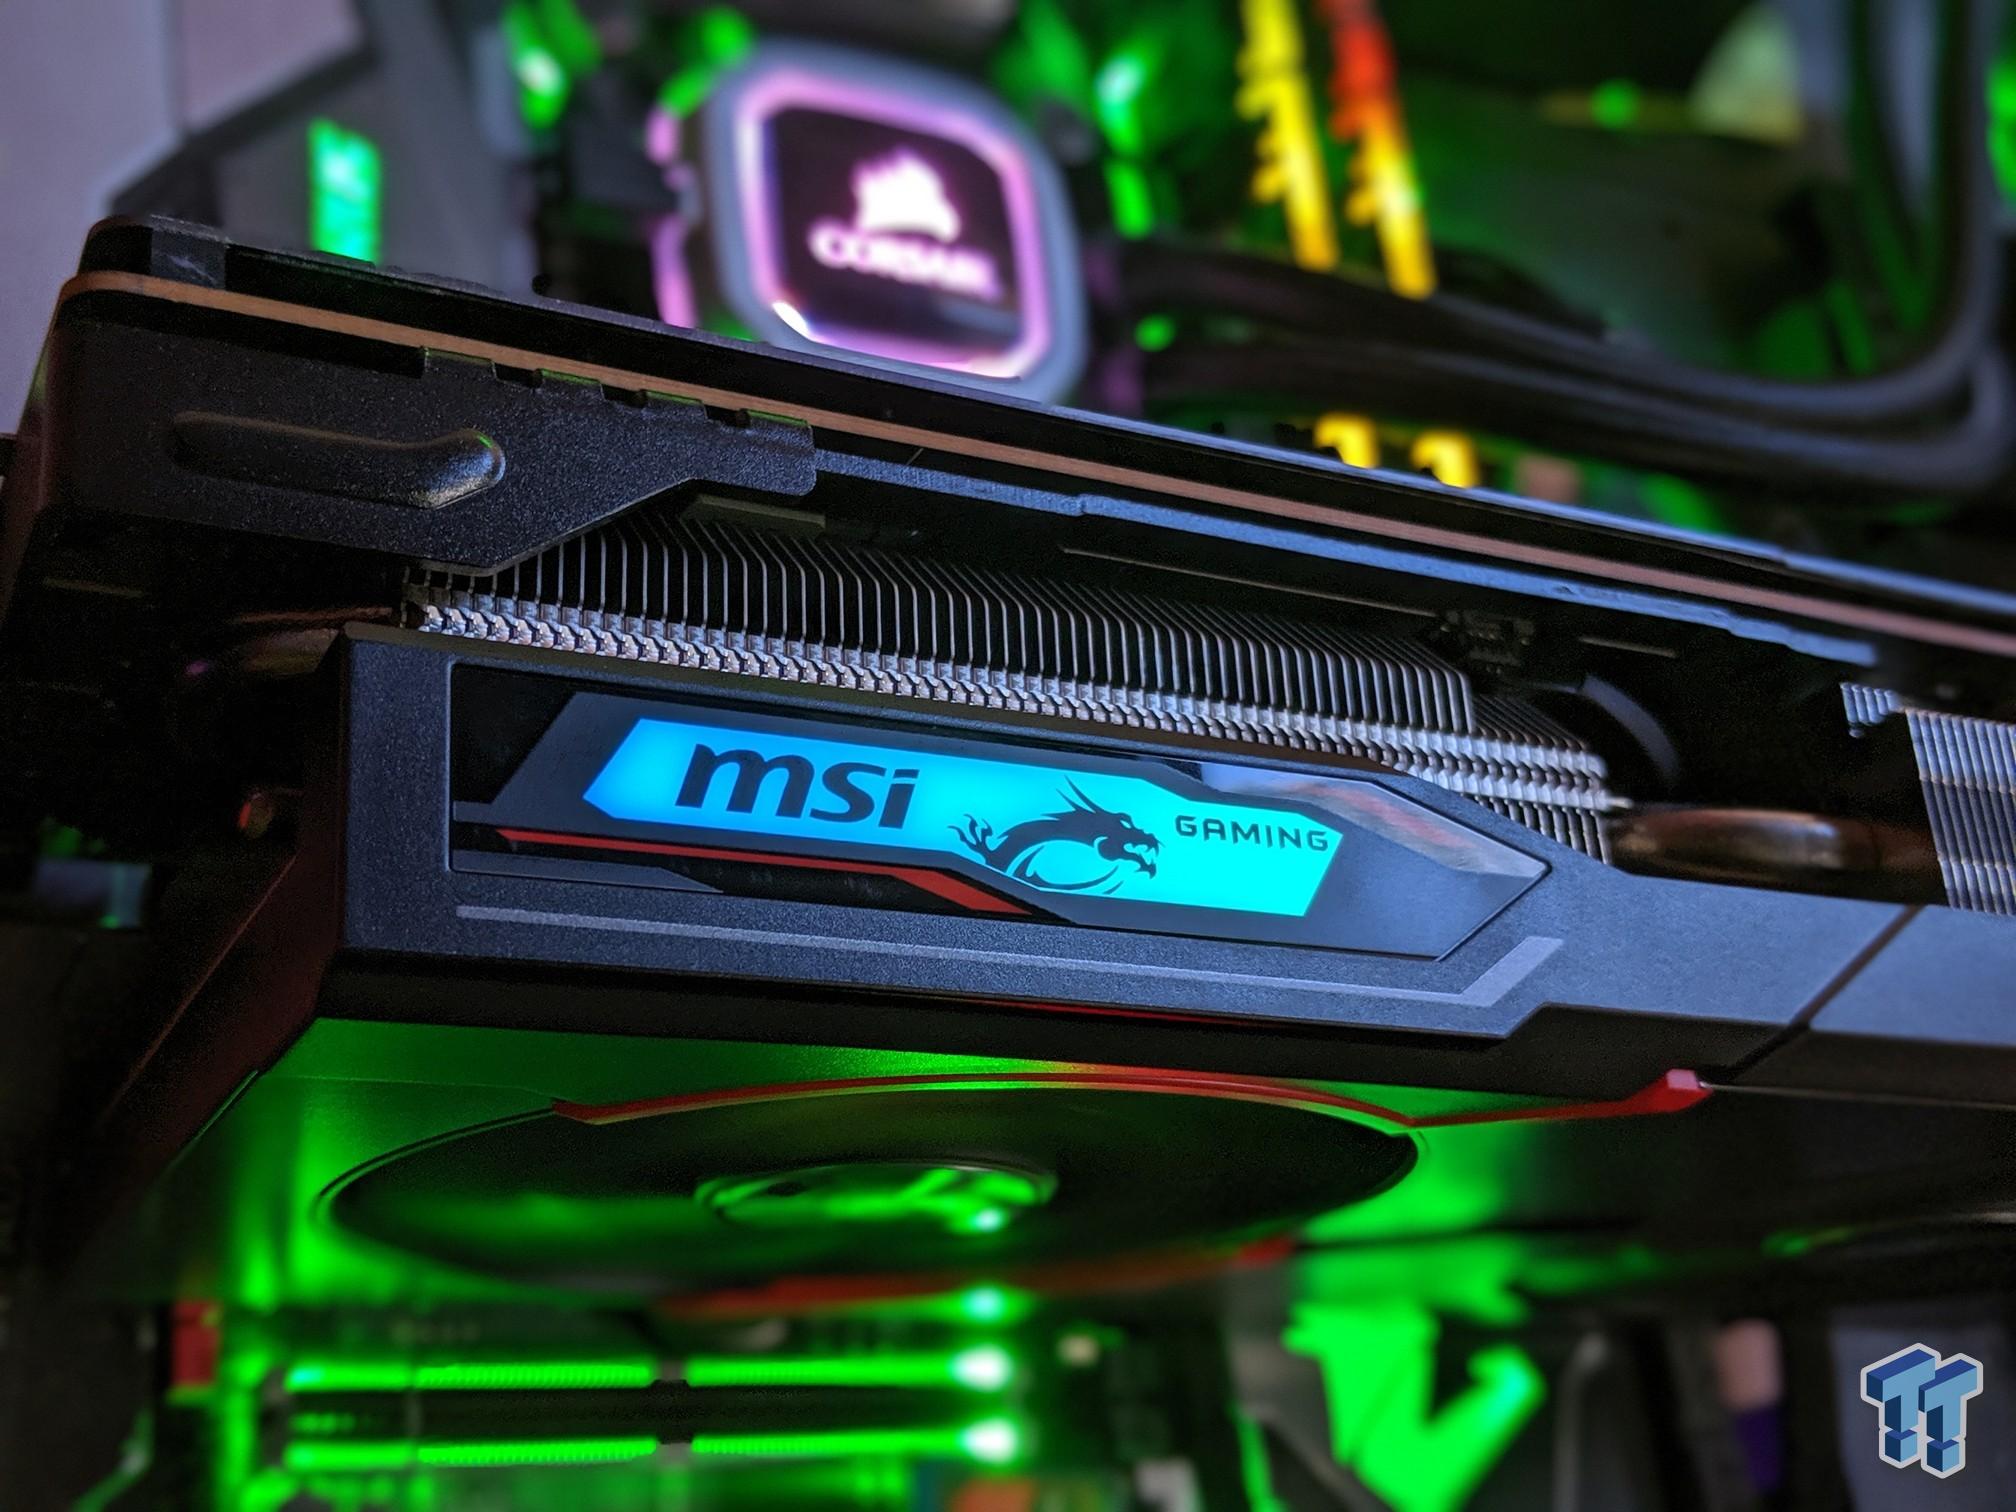 MSI Radeon RX 5700 XT GAMING X Review 